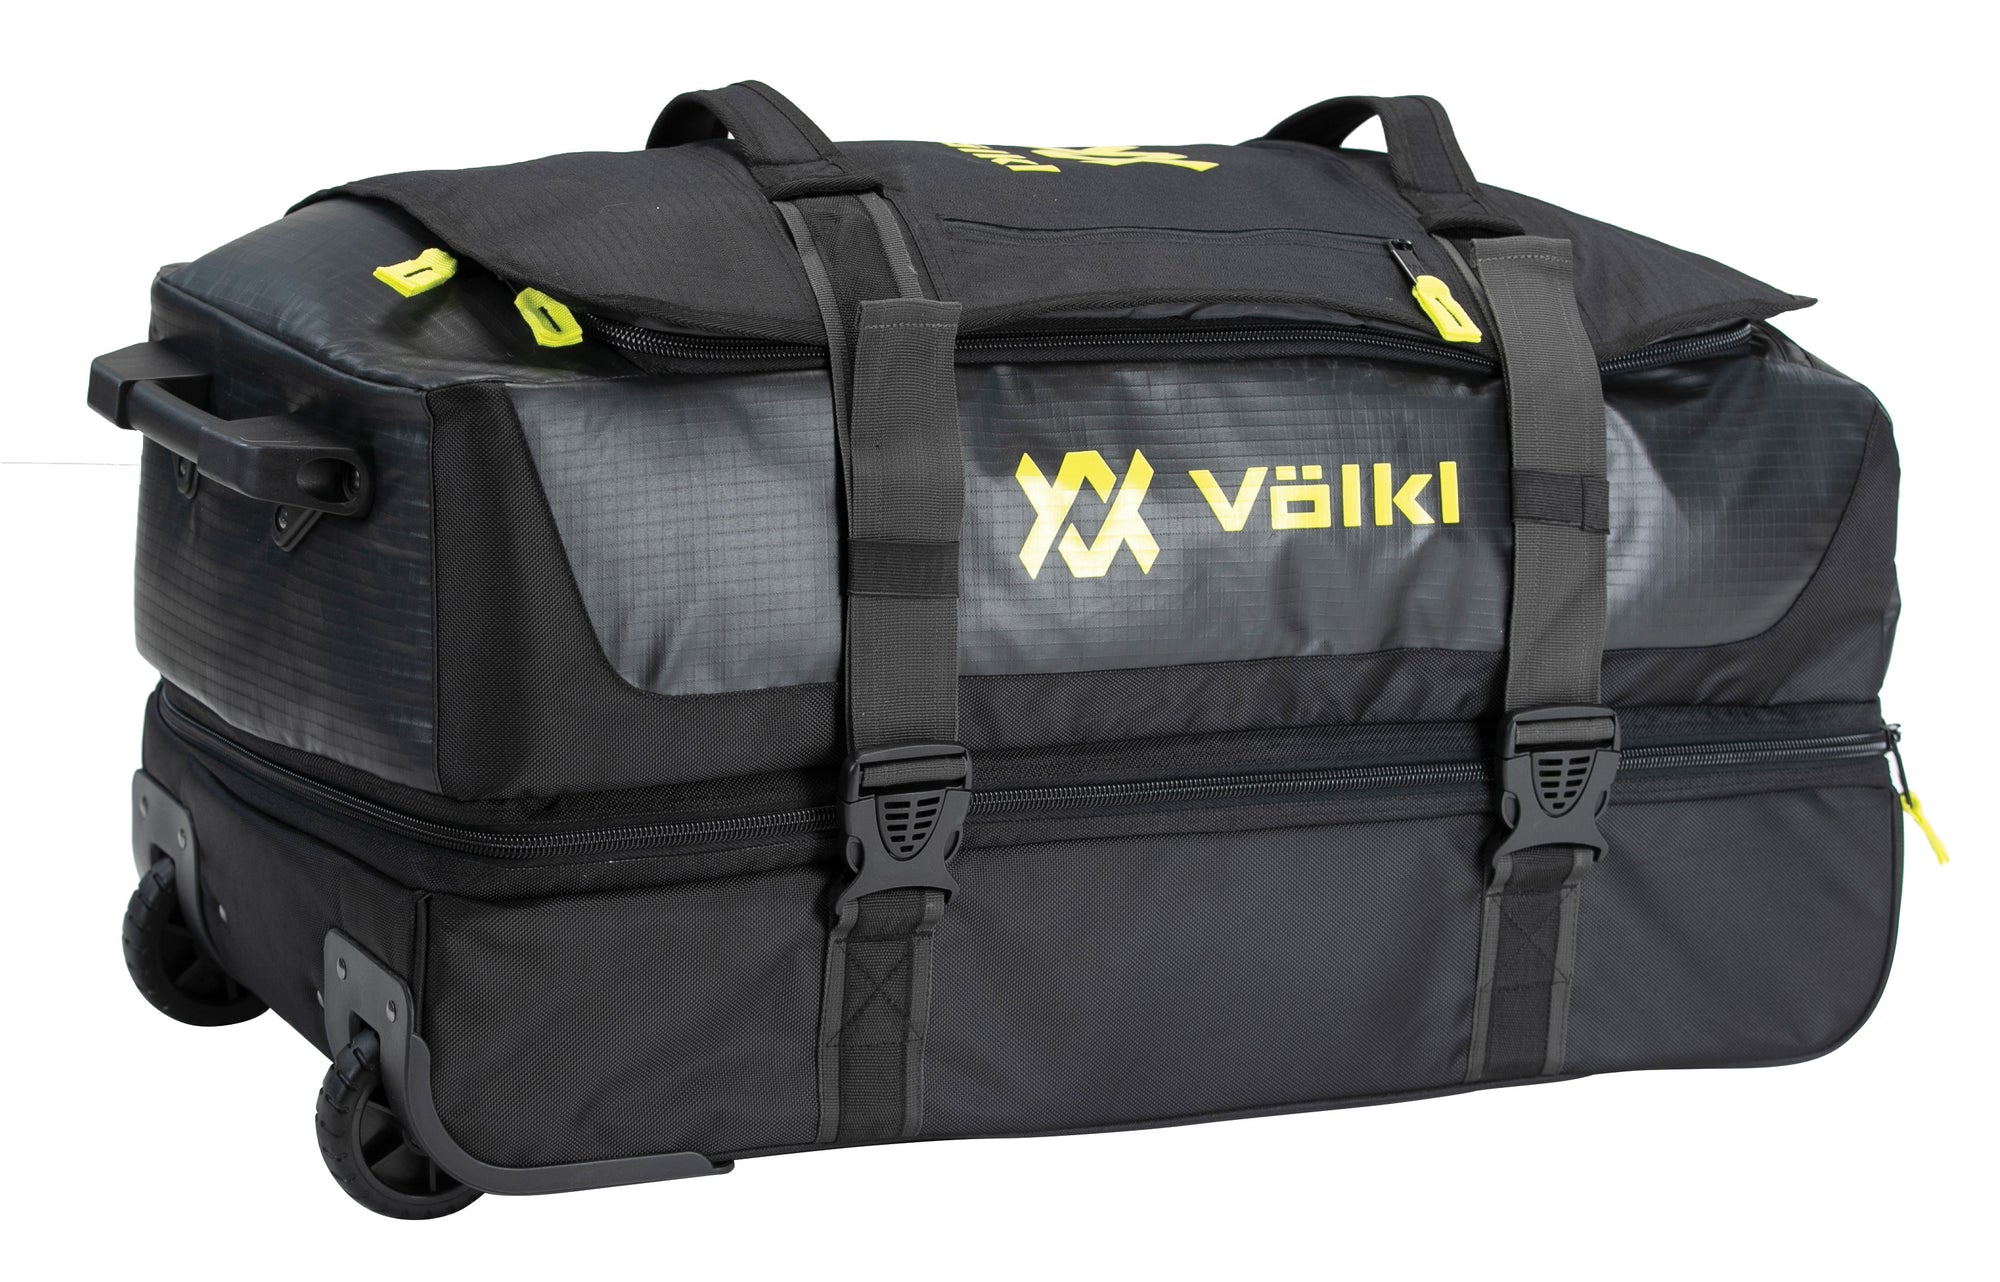 Volkl Rolling 30 All Pro Duffle bag 130L - Black